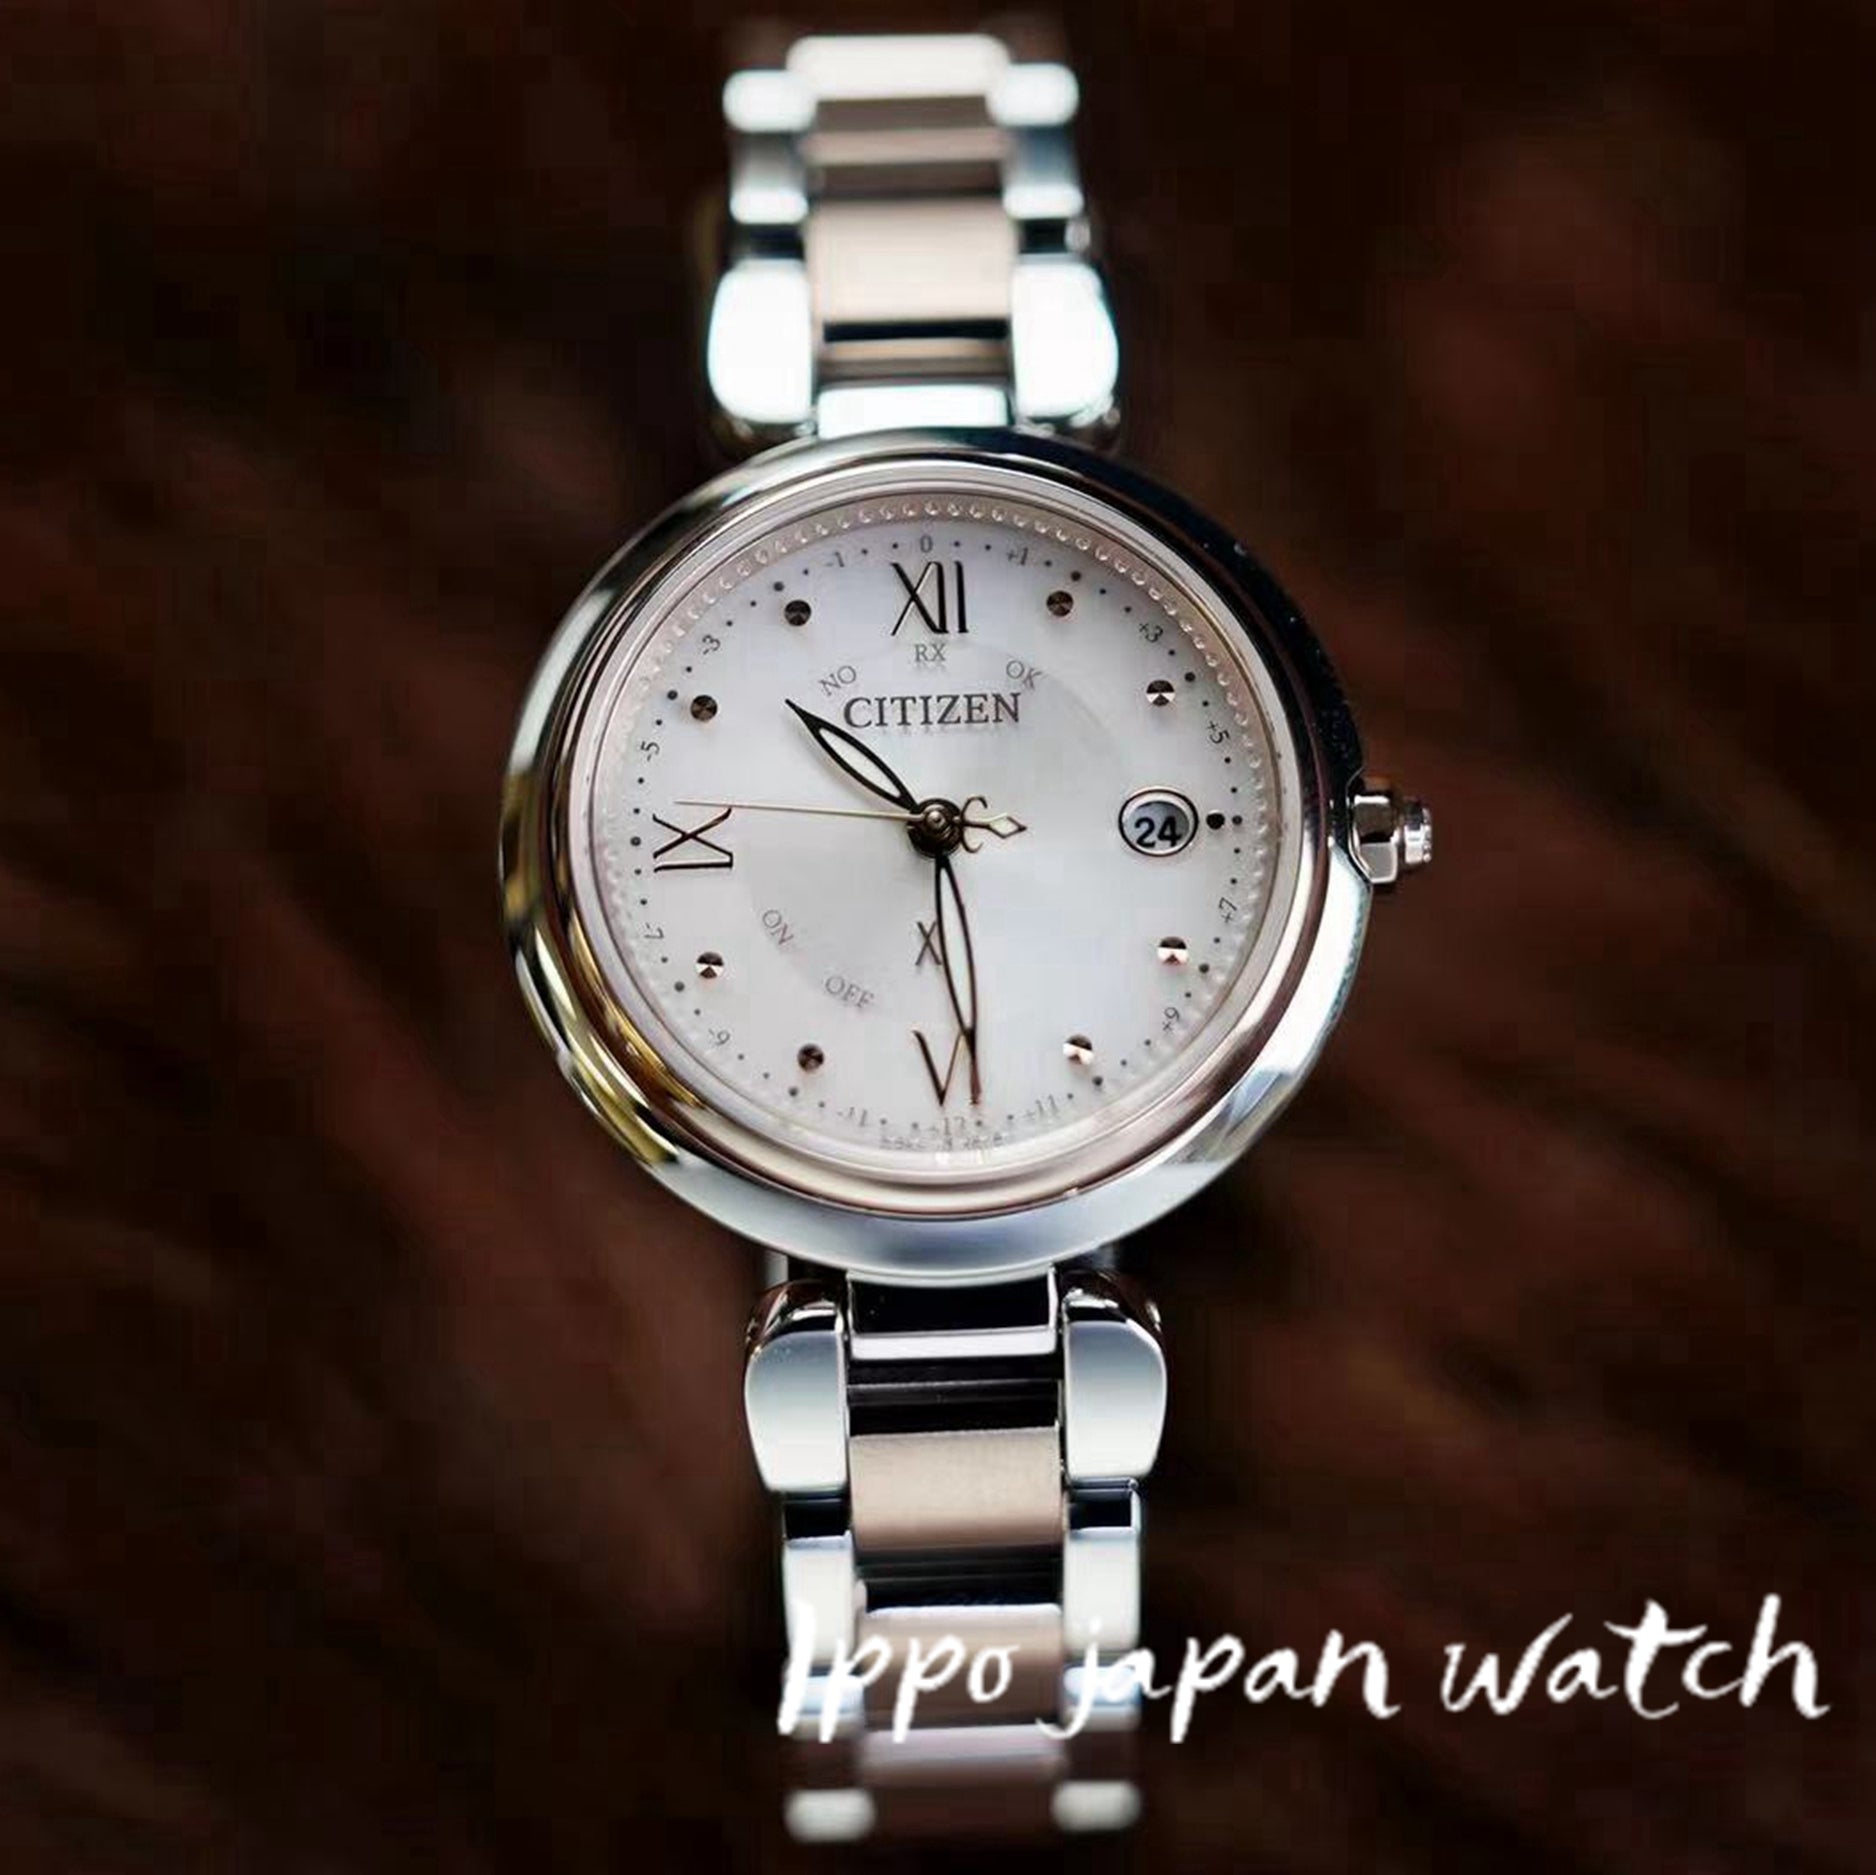 CITIZEN XC ES9465-50W Photovoltaic eco-drive Super titanium watch - IPPO JAPAN WATCH 